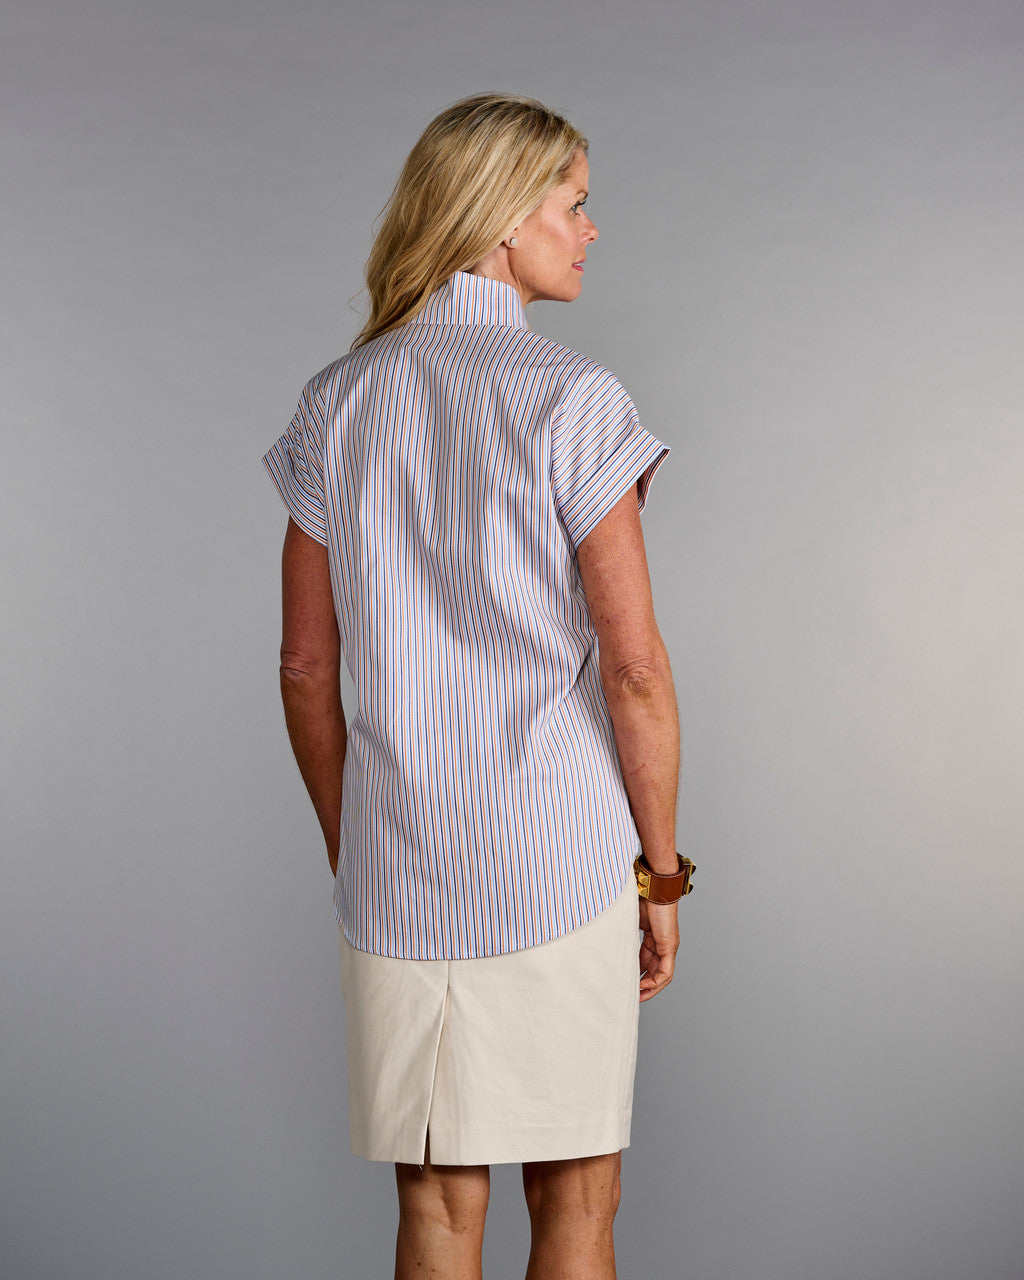 Claridge & King Short Sleeve Top - (two colors)